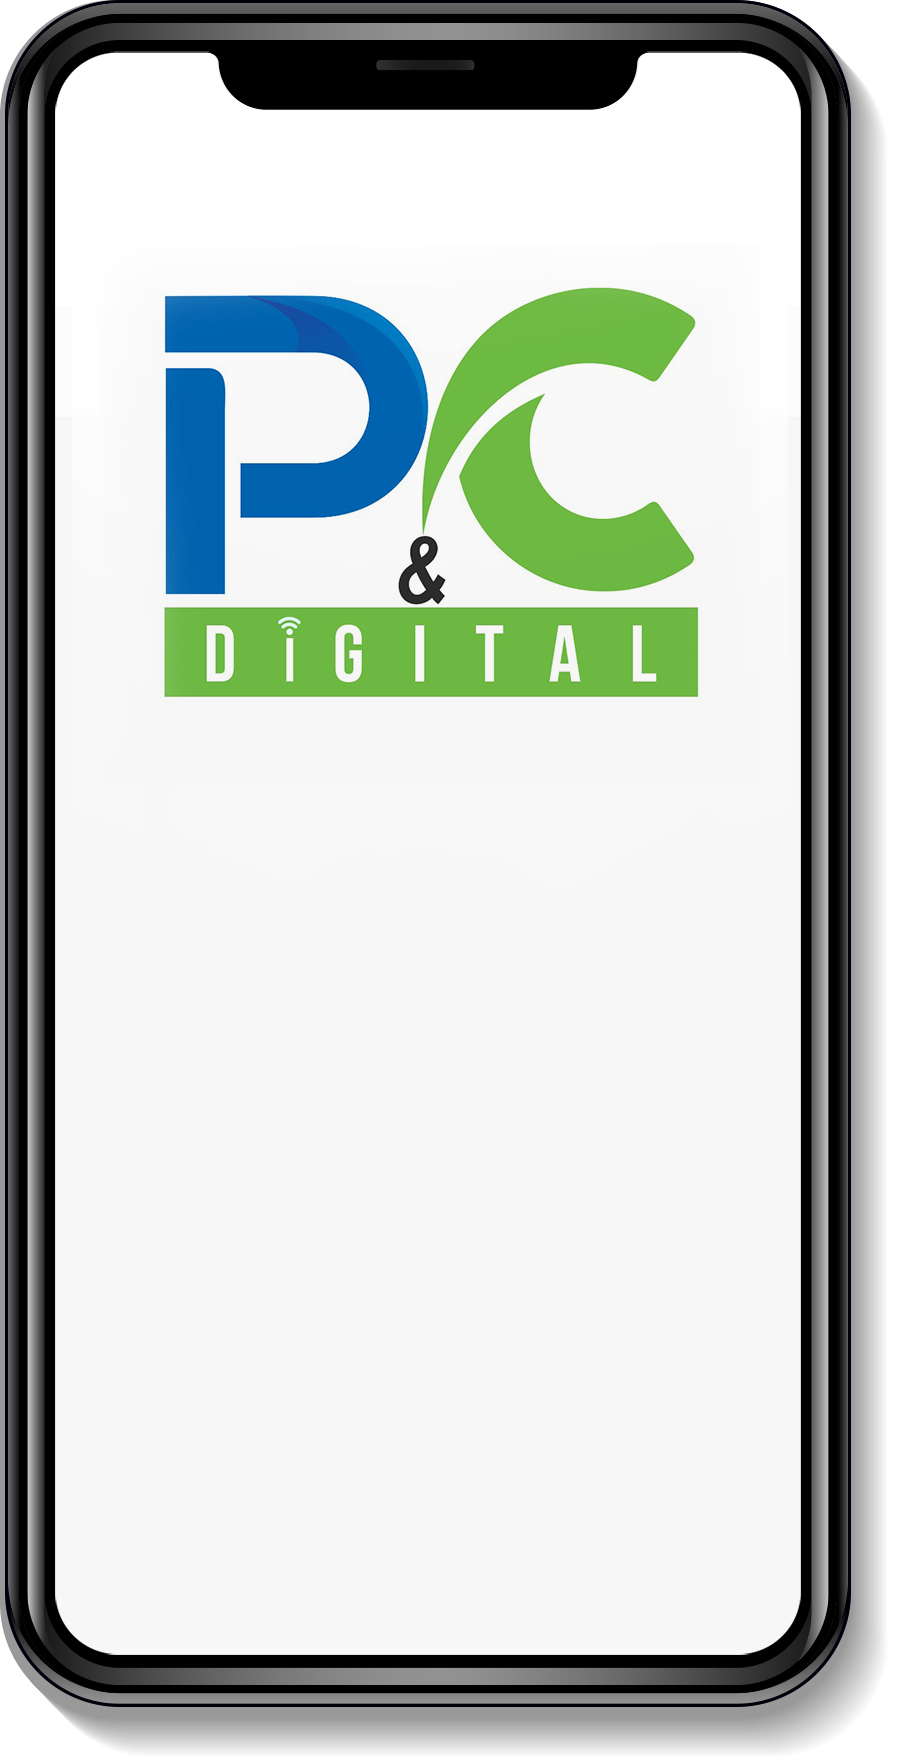 P&C Digital